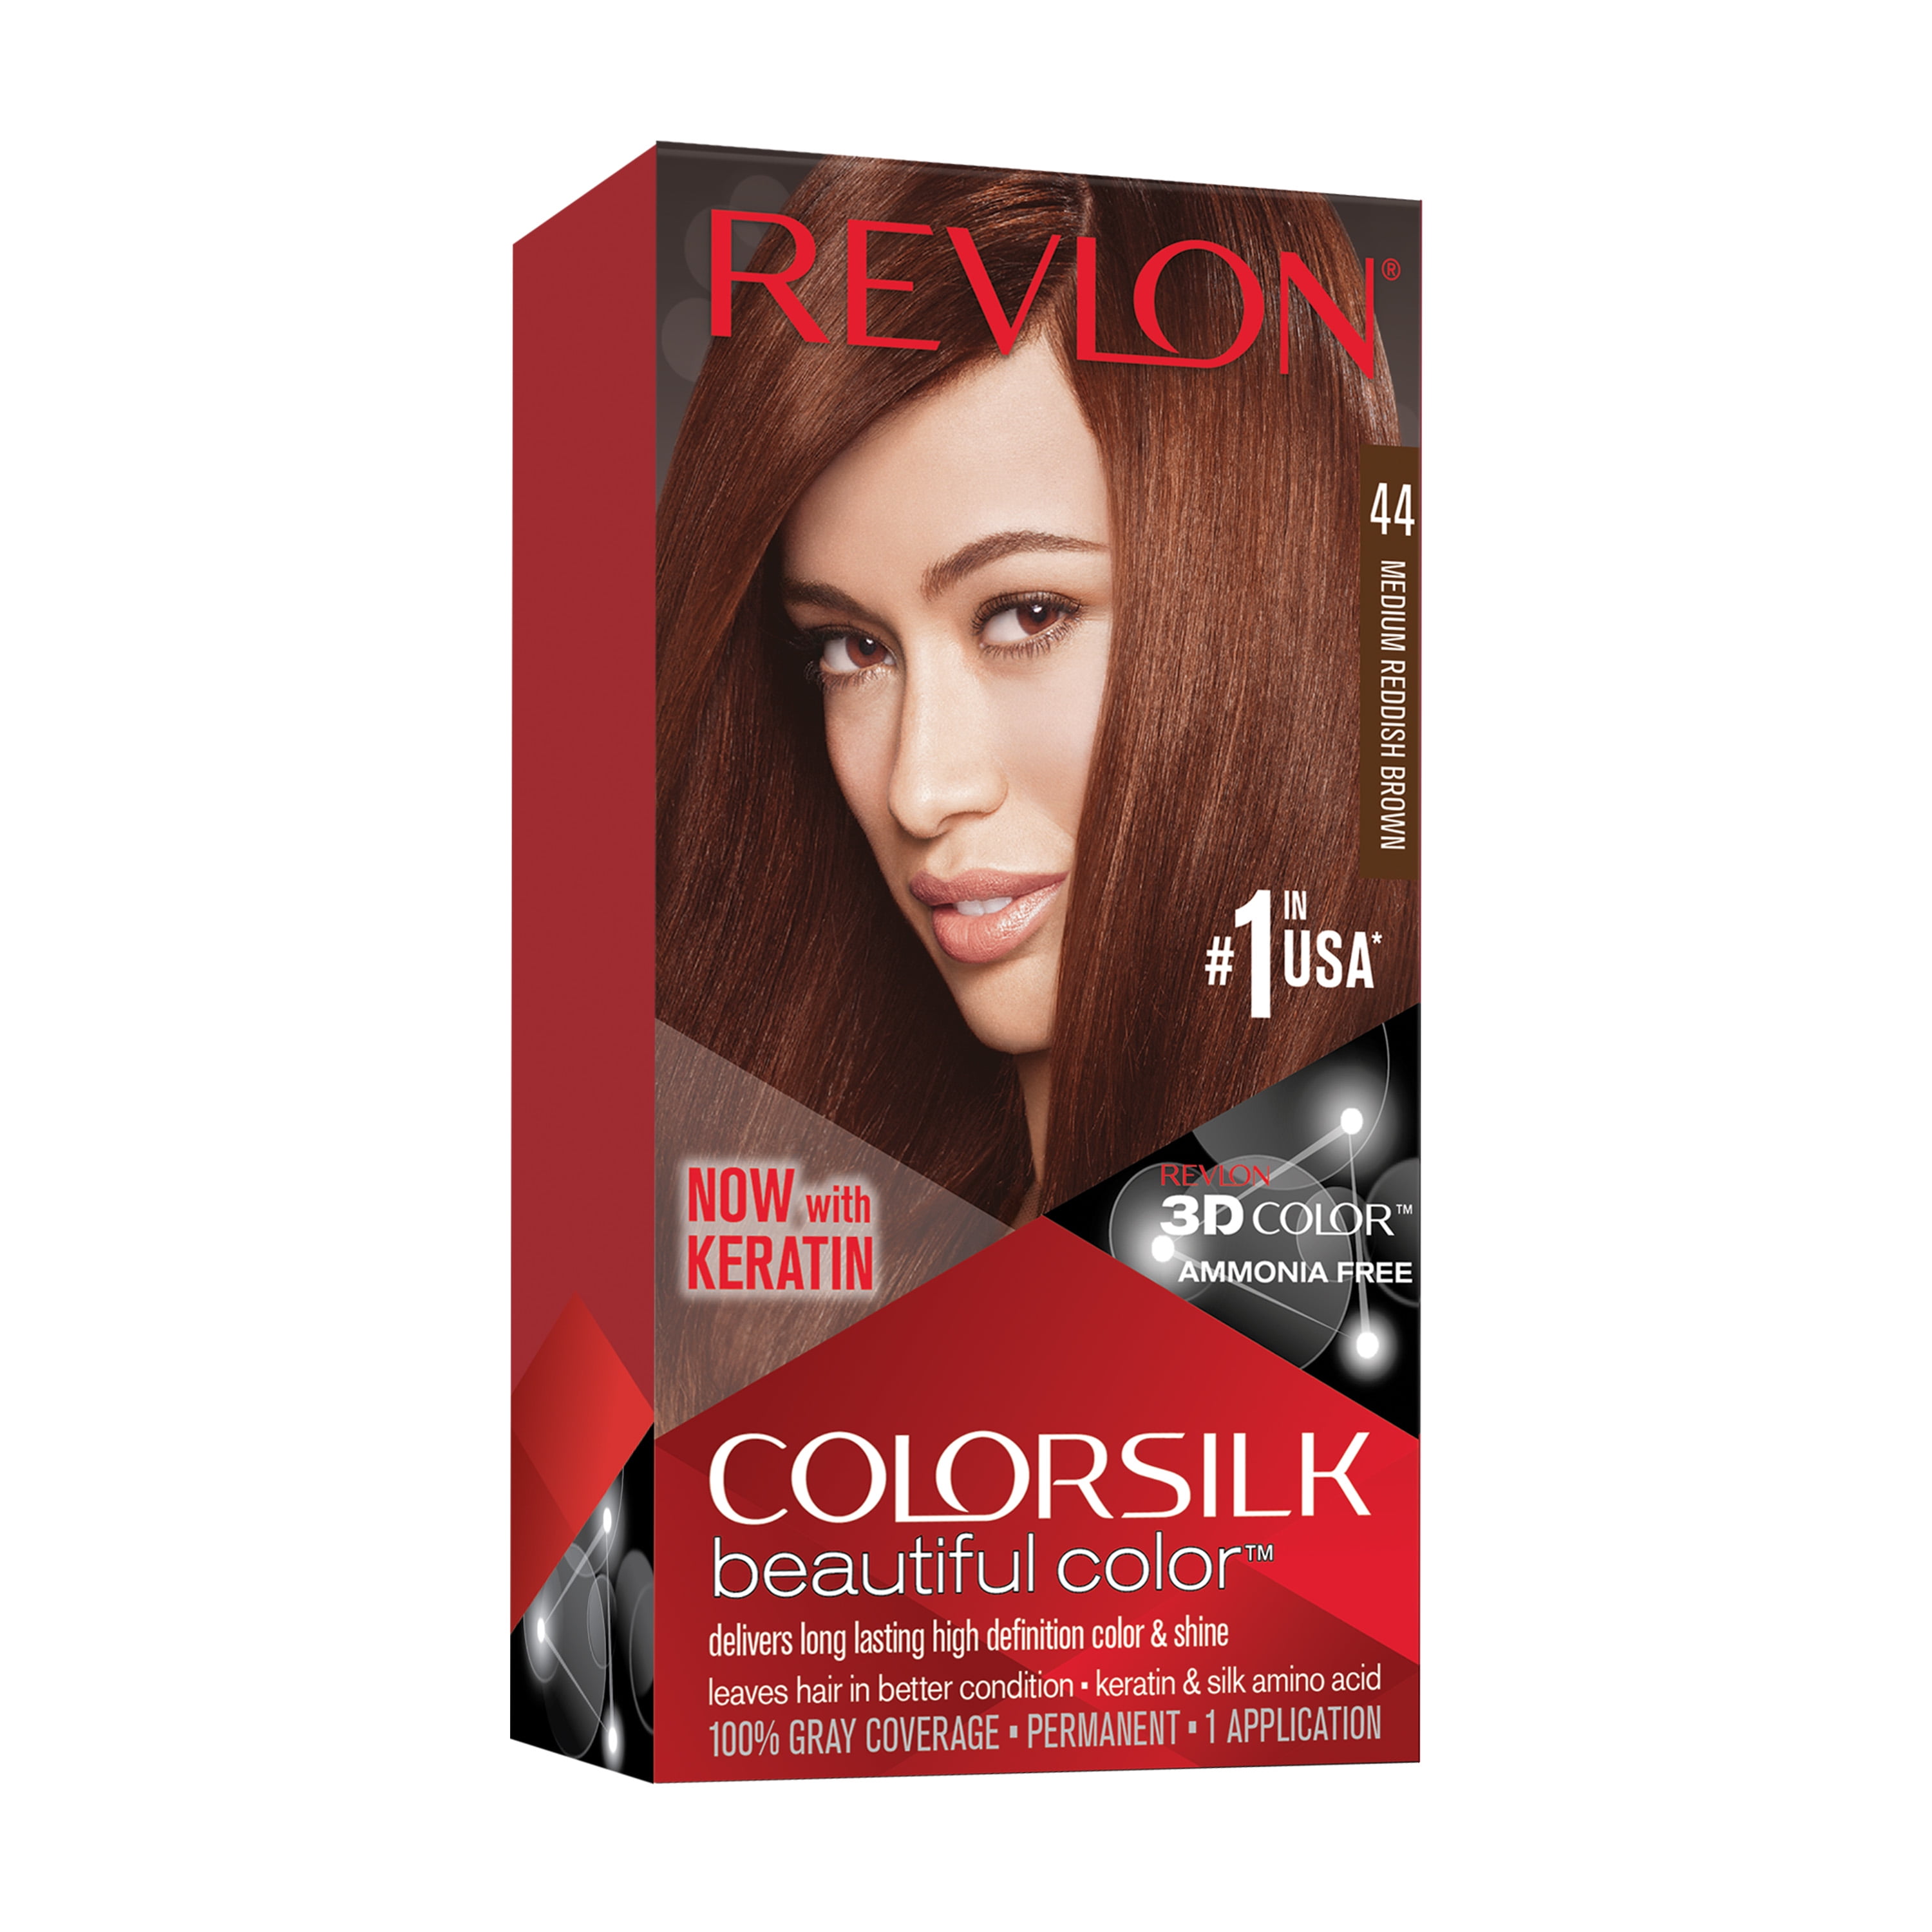 Revlon ColorSilk Beautiful Color Permanent Hair Color, 33 Dark Soft Brown,  1 Count 